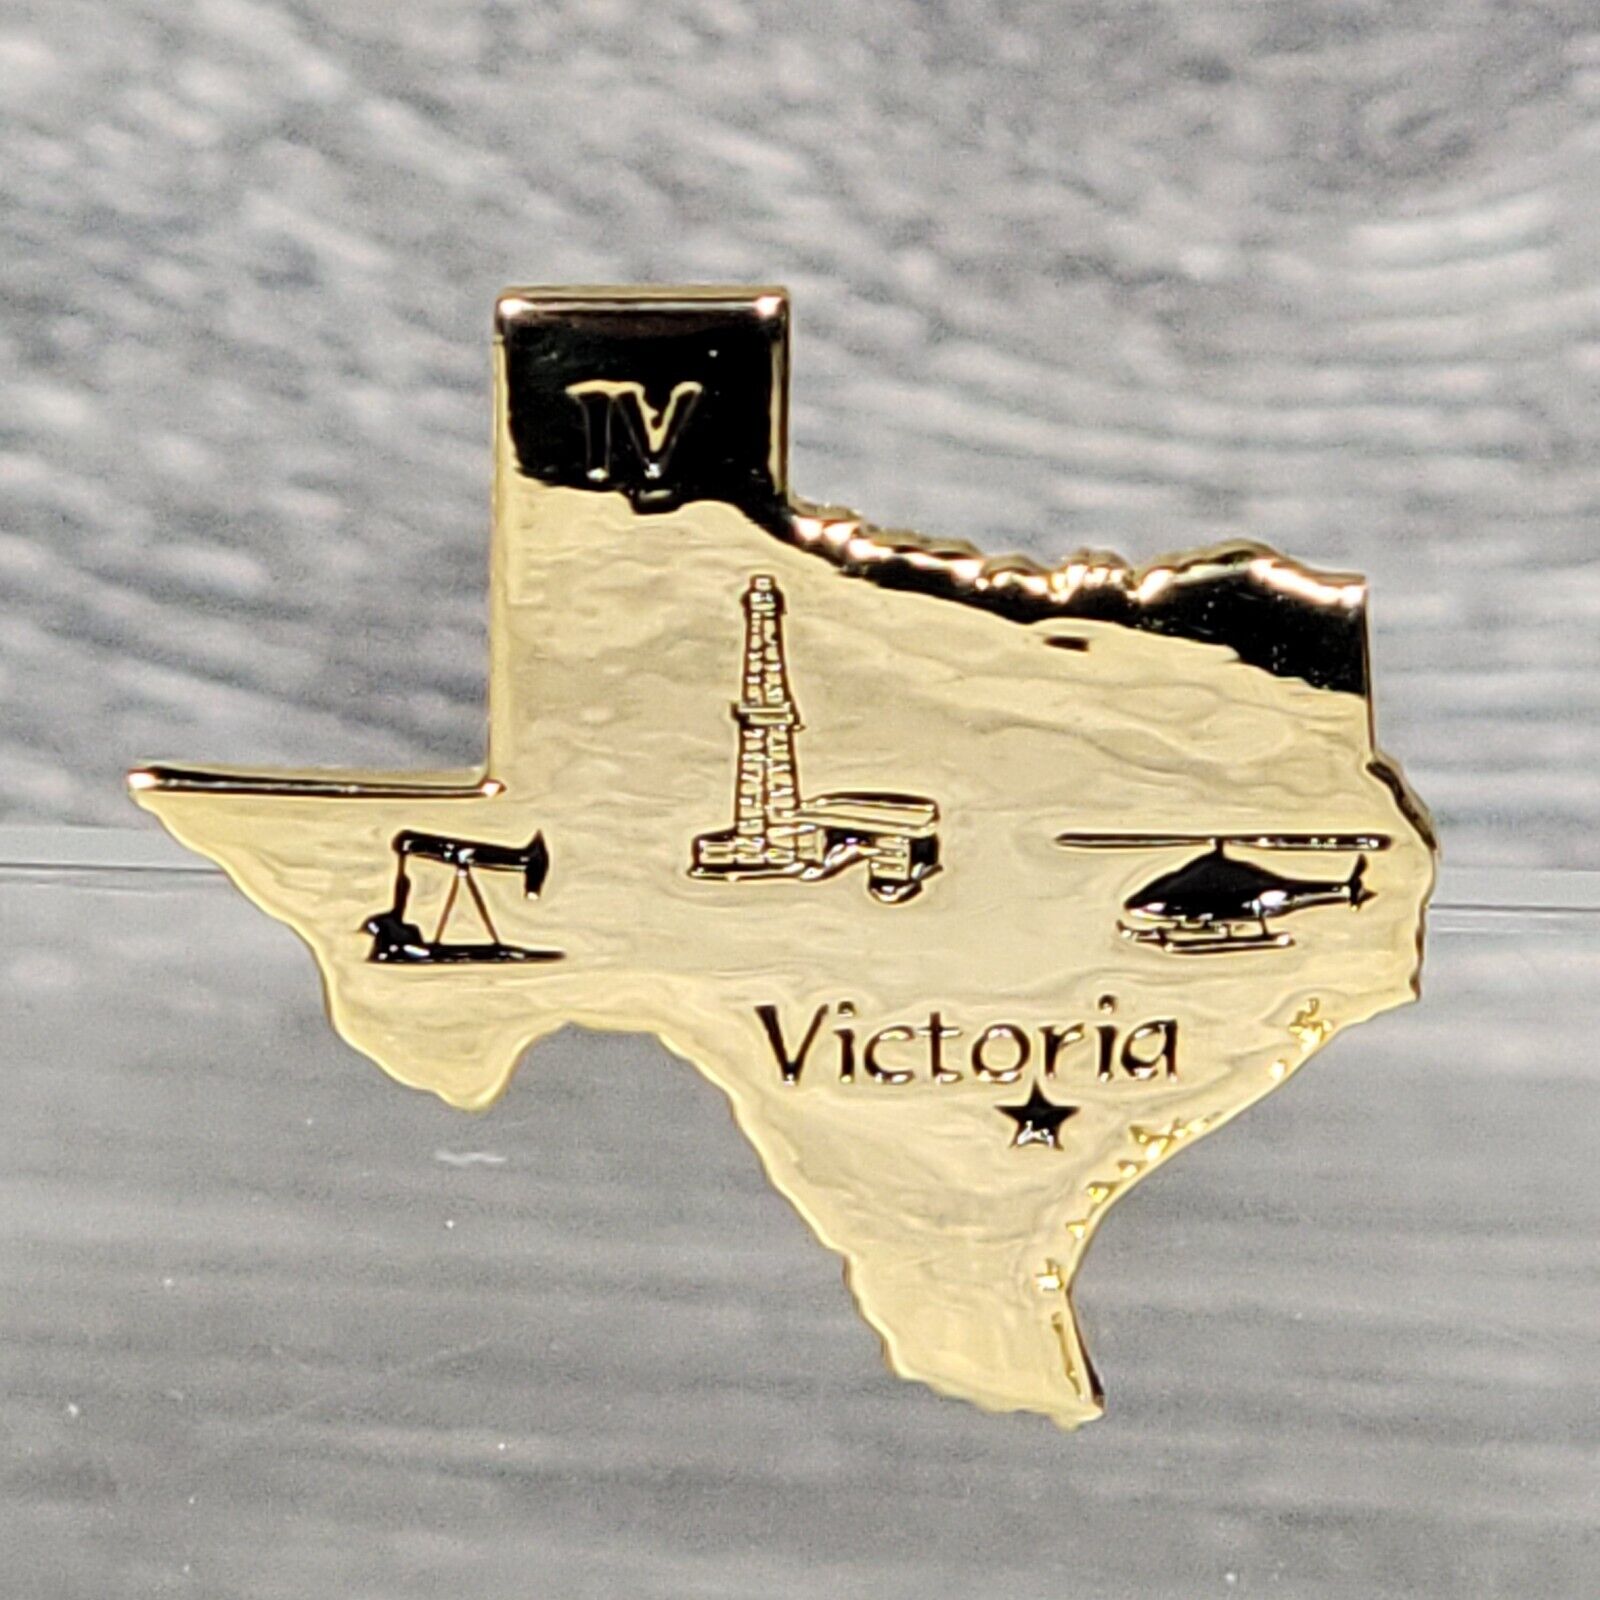 Victoria Texas Enamel Pin Button Oil Rig Derrick Helicopter Hat Lapel Tie Vest